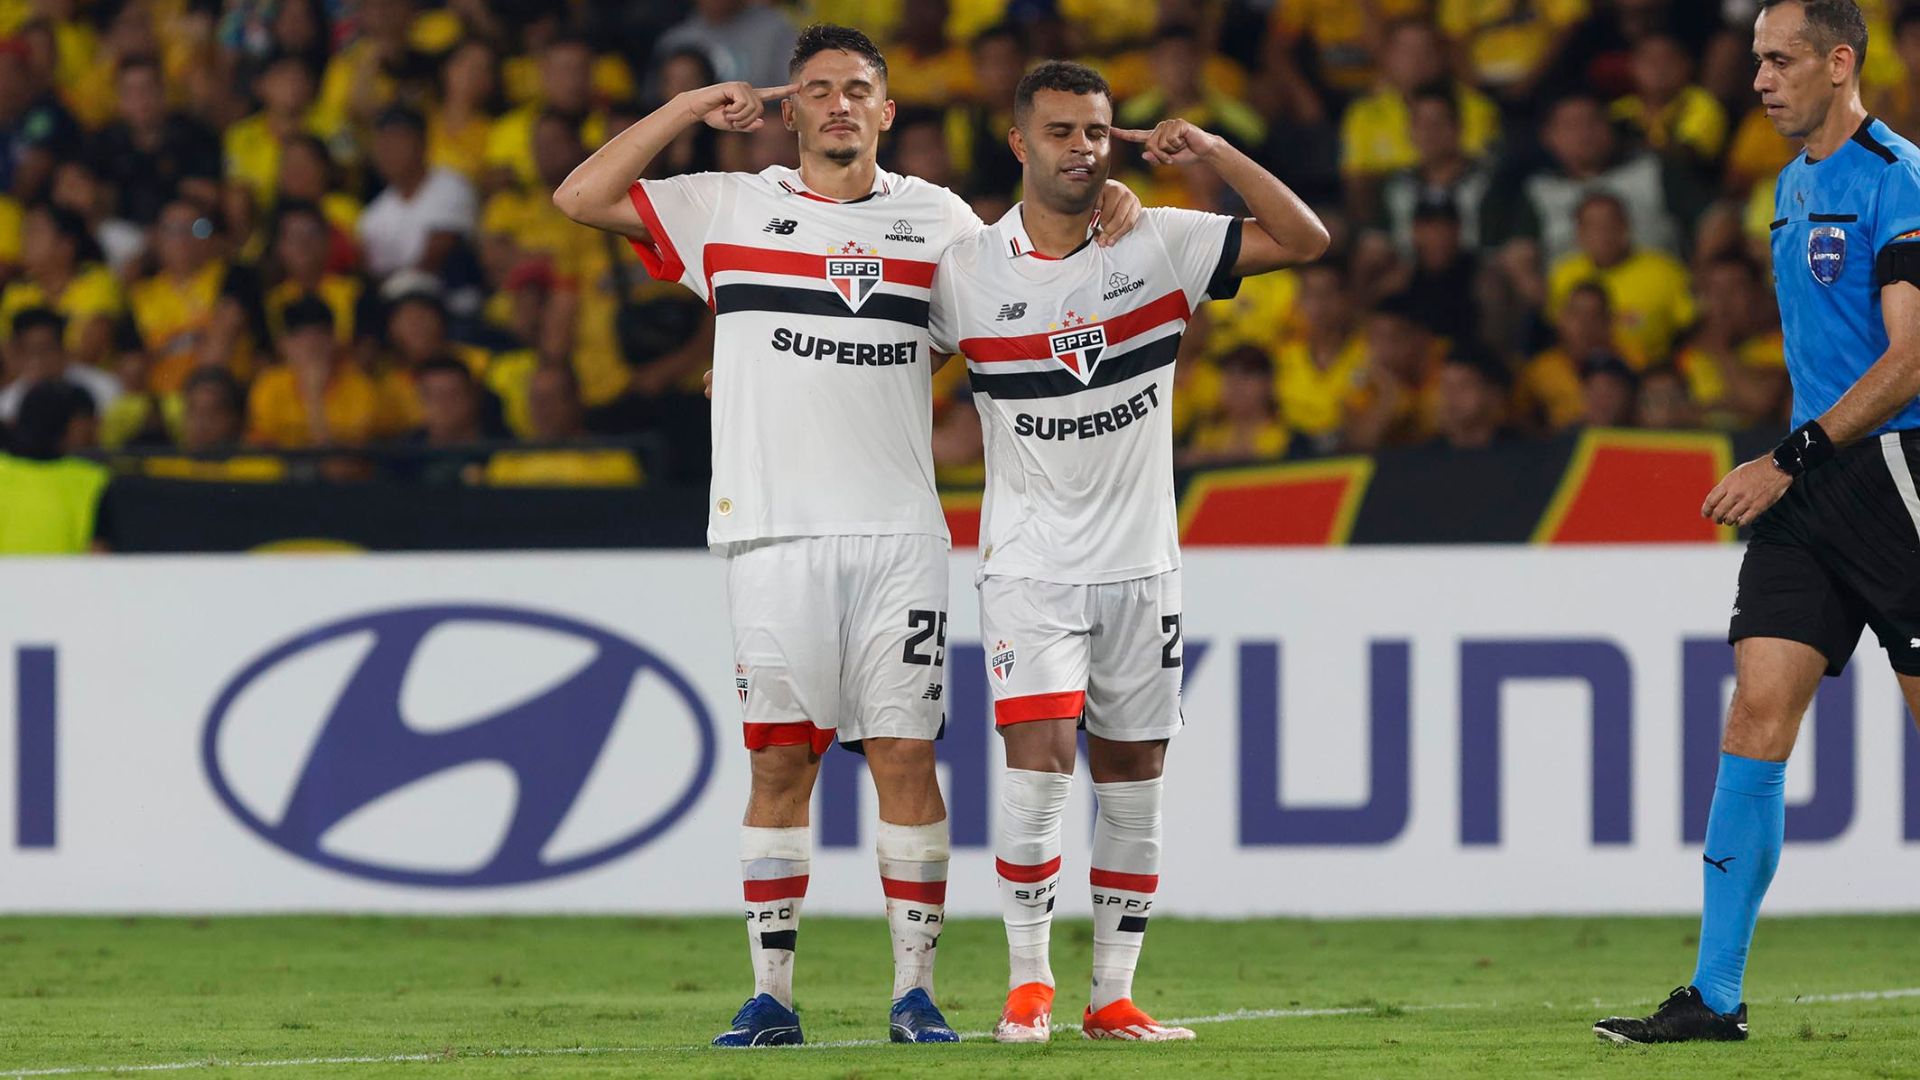 Pablo Maia e Alisson comemorando gol na partida contra o Barcelona de Guayaquil (Crédito: Getty Images)